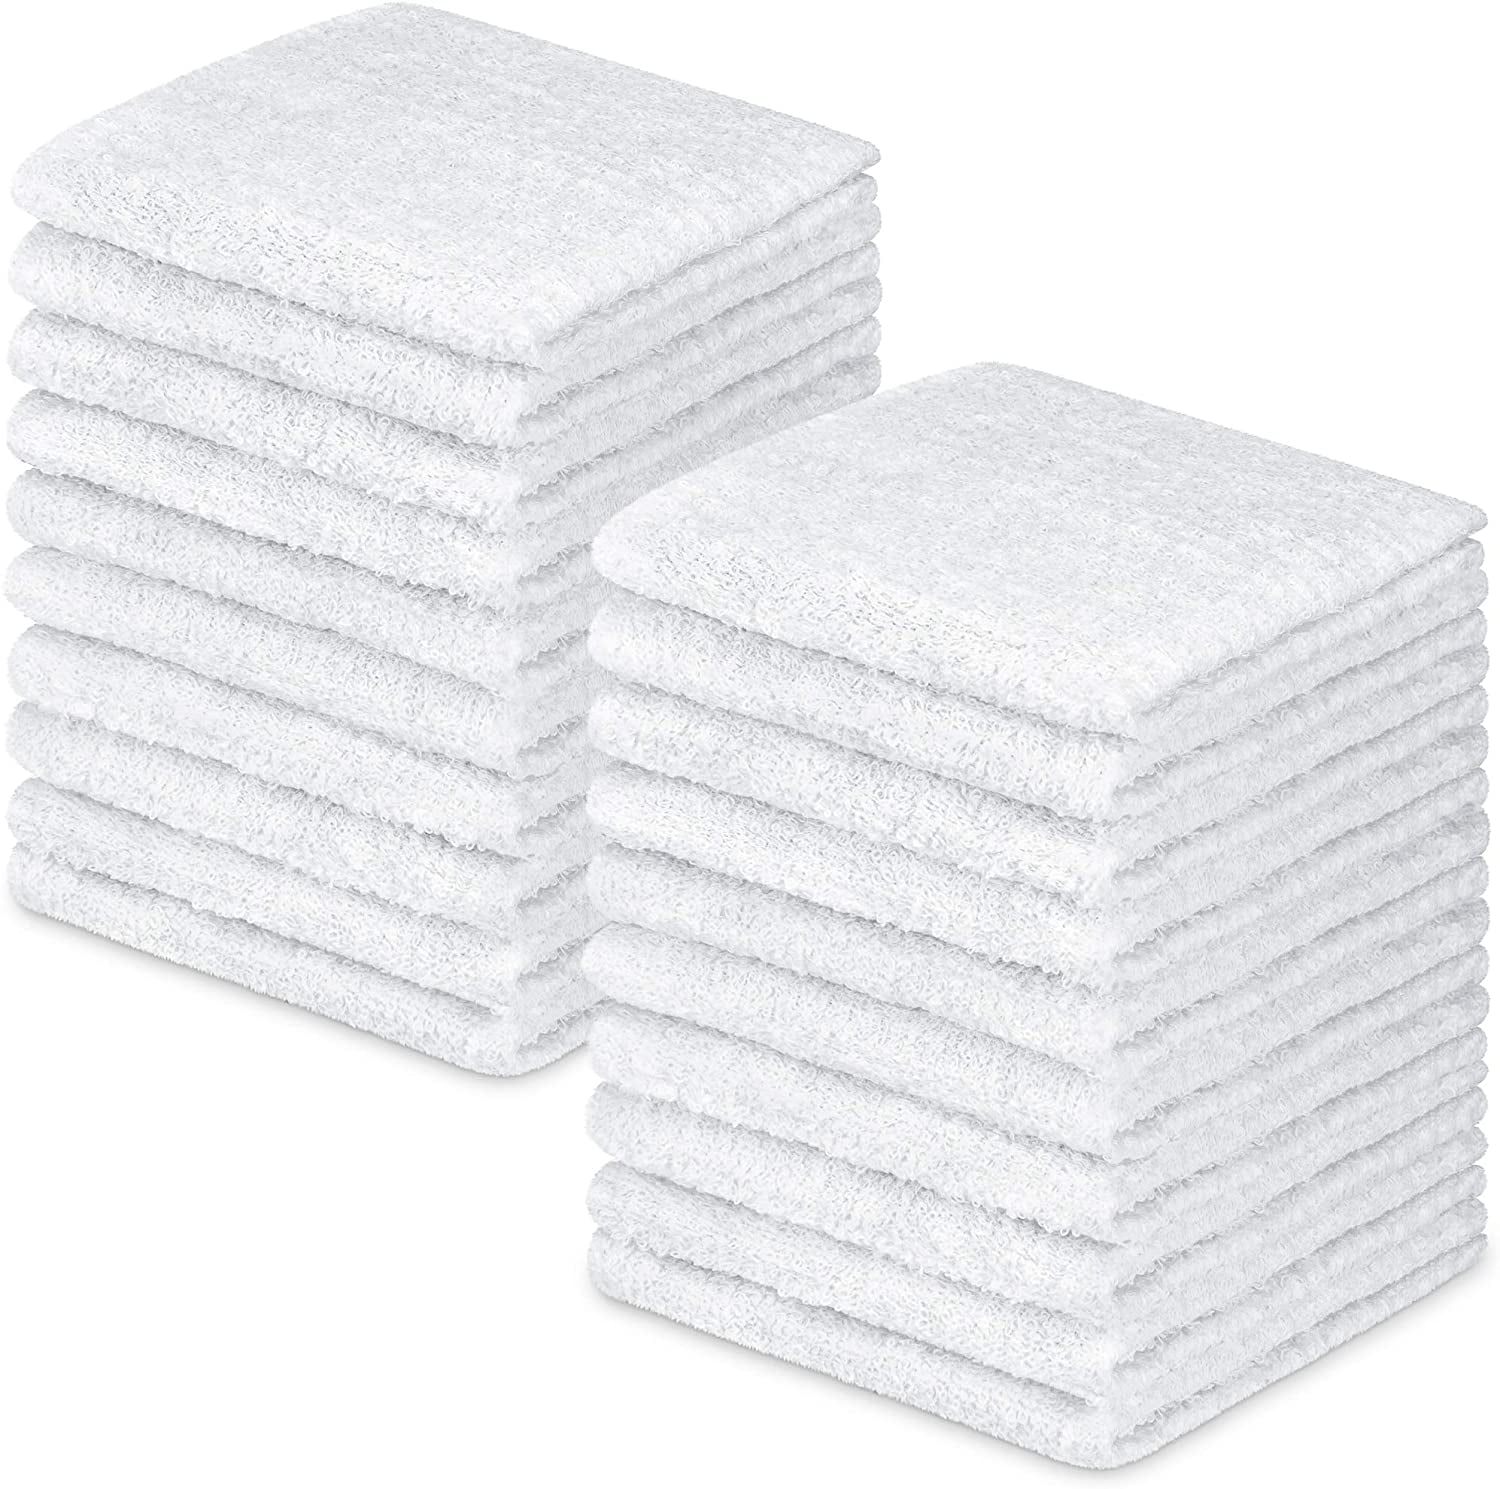 DecorRack 100% Cotton Wash Cloth, 12 x 12 inch, White (20 Pack)